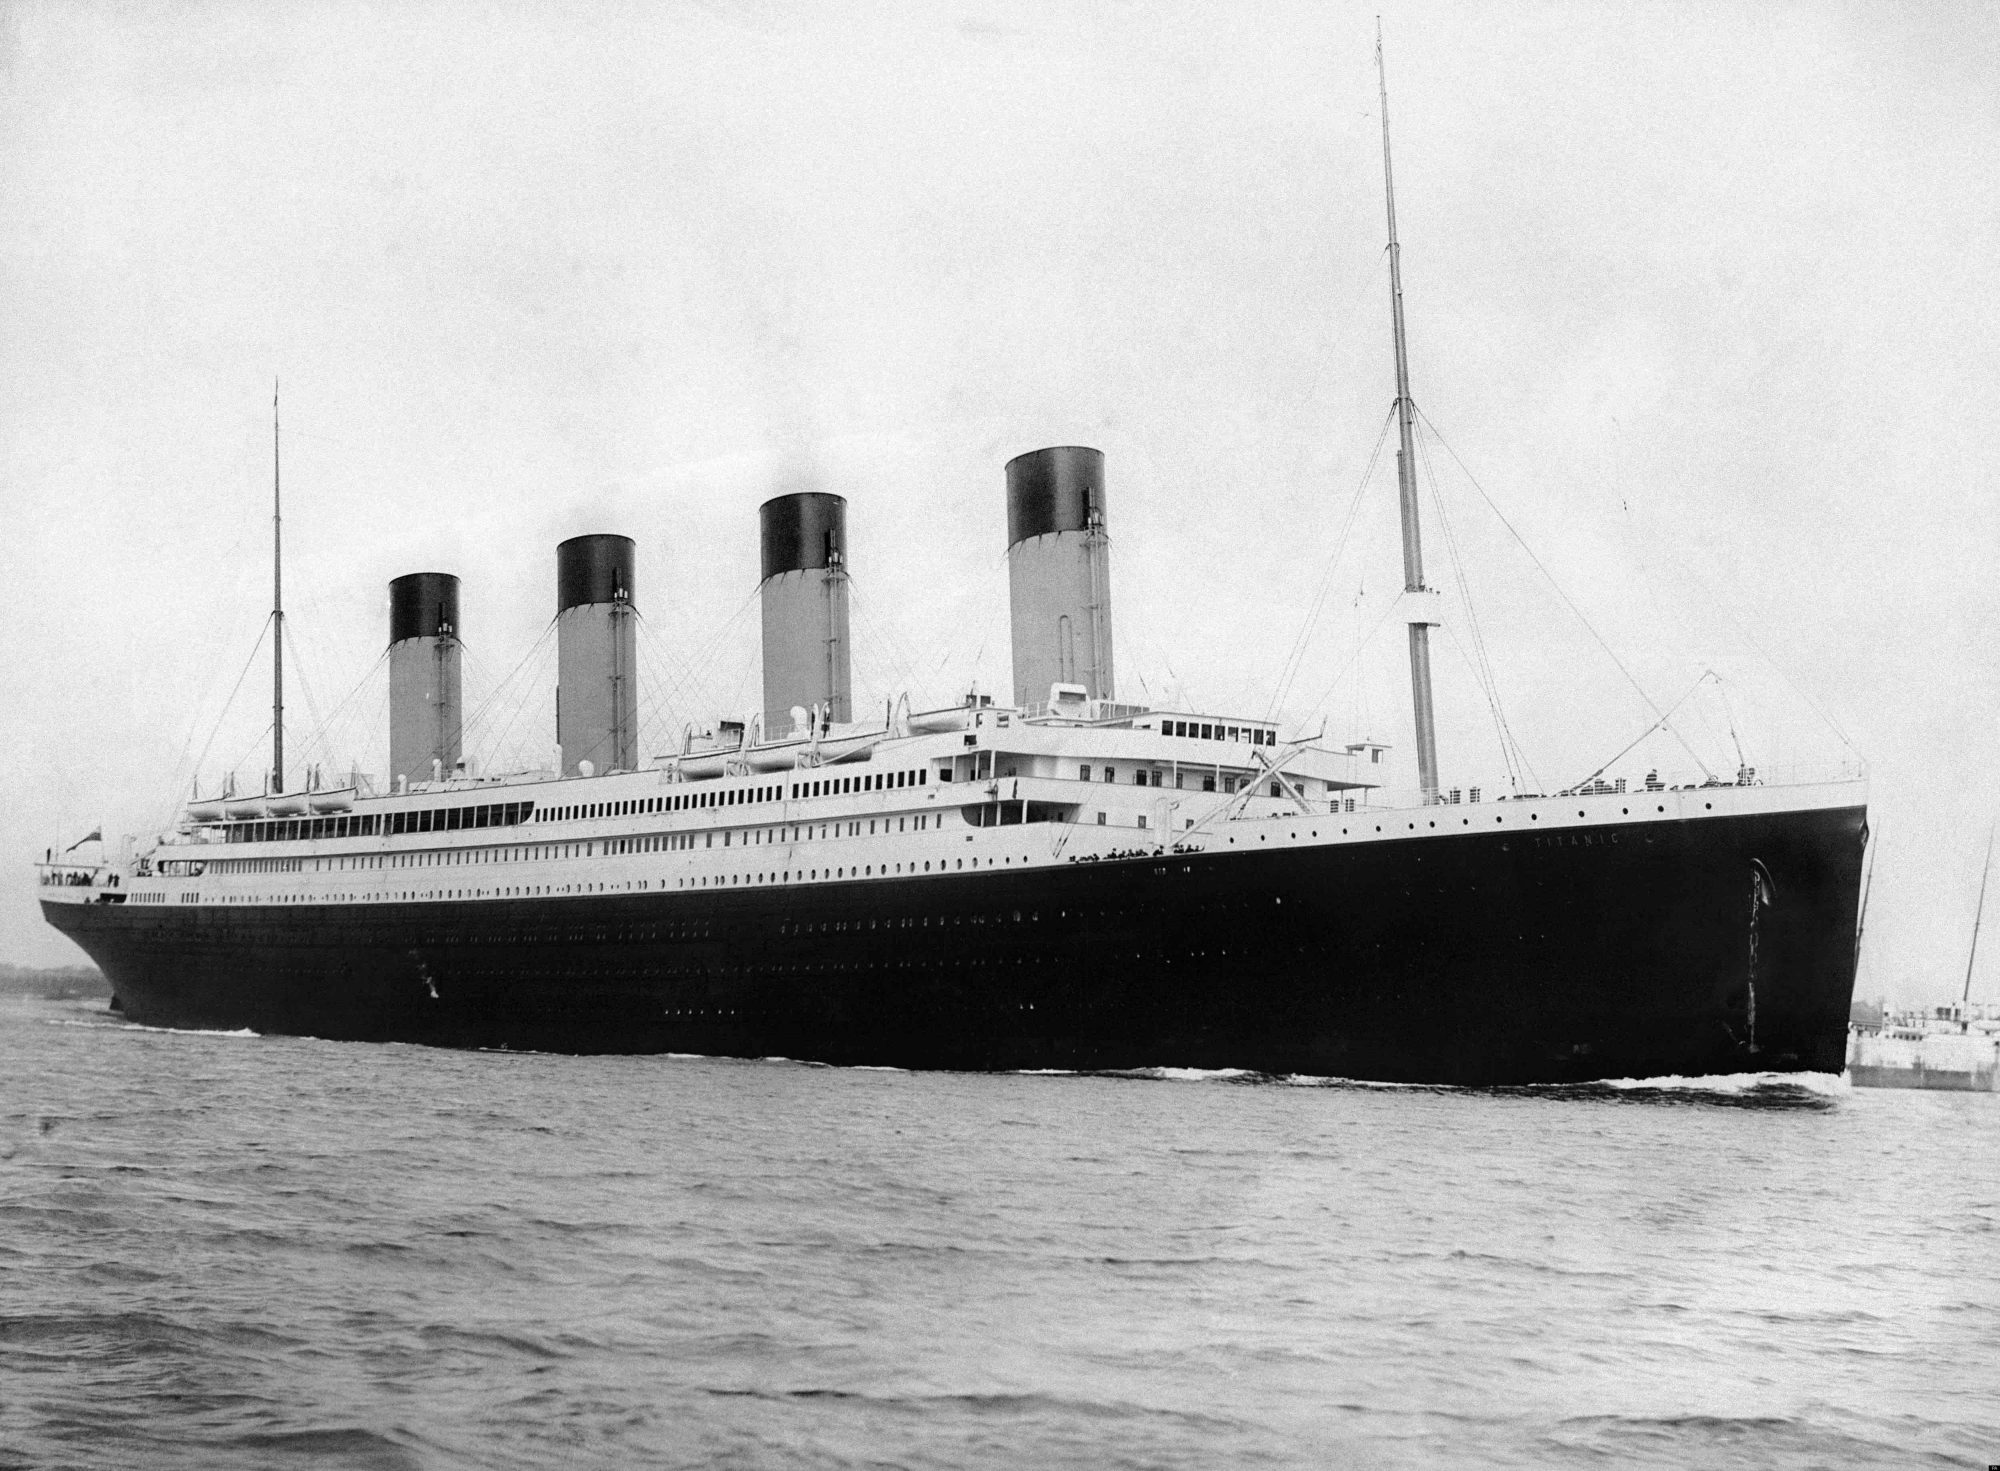 1912 - Titanic sinks #1 (Wikimedia commons)